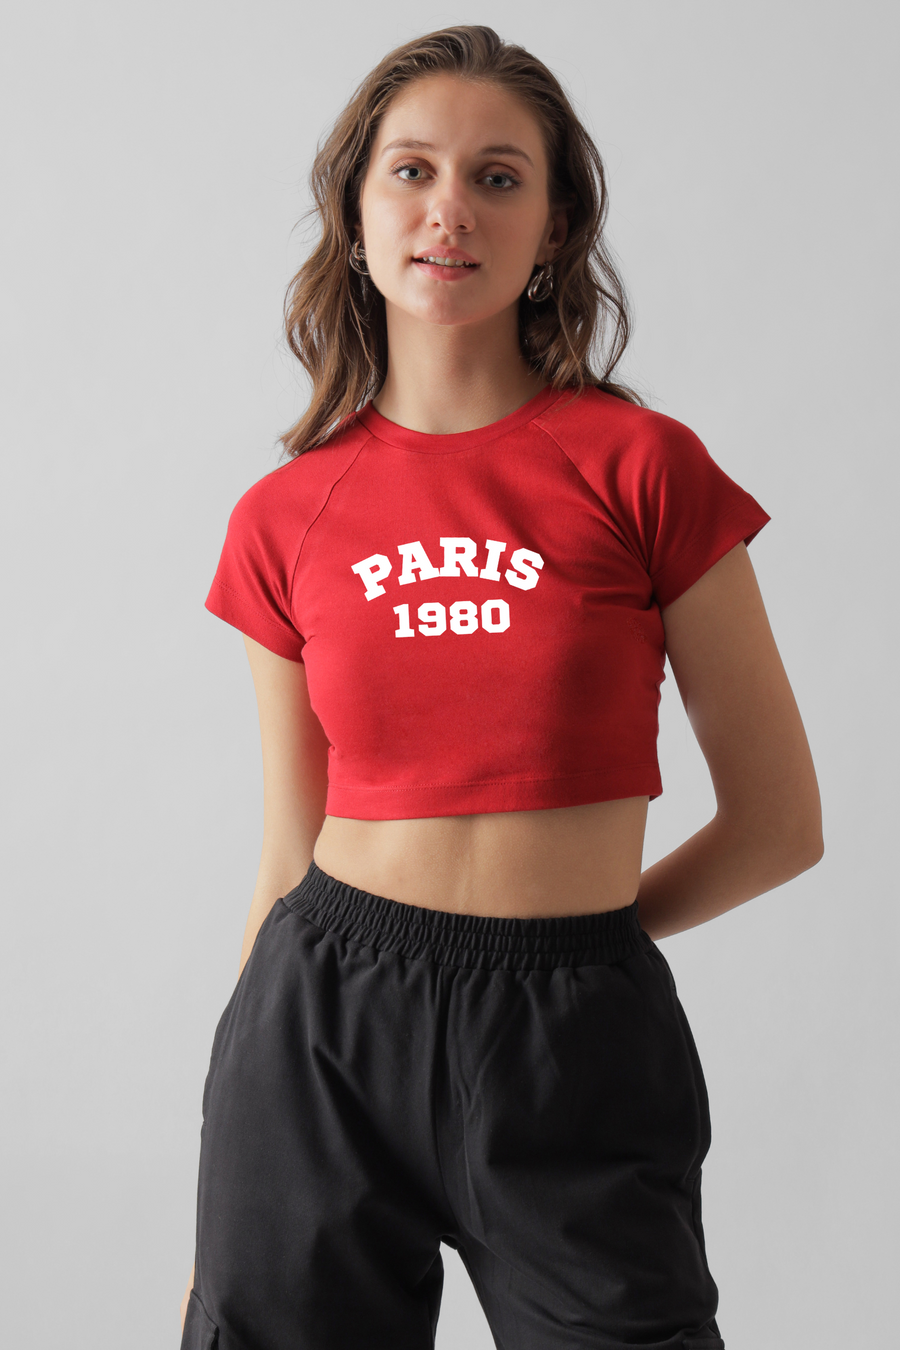 Paris 1980-Baby tee